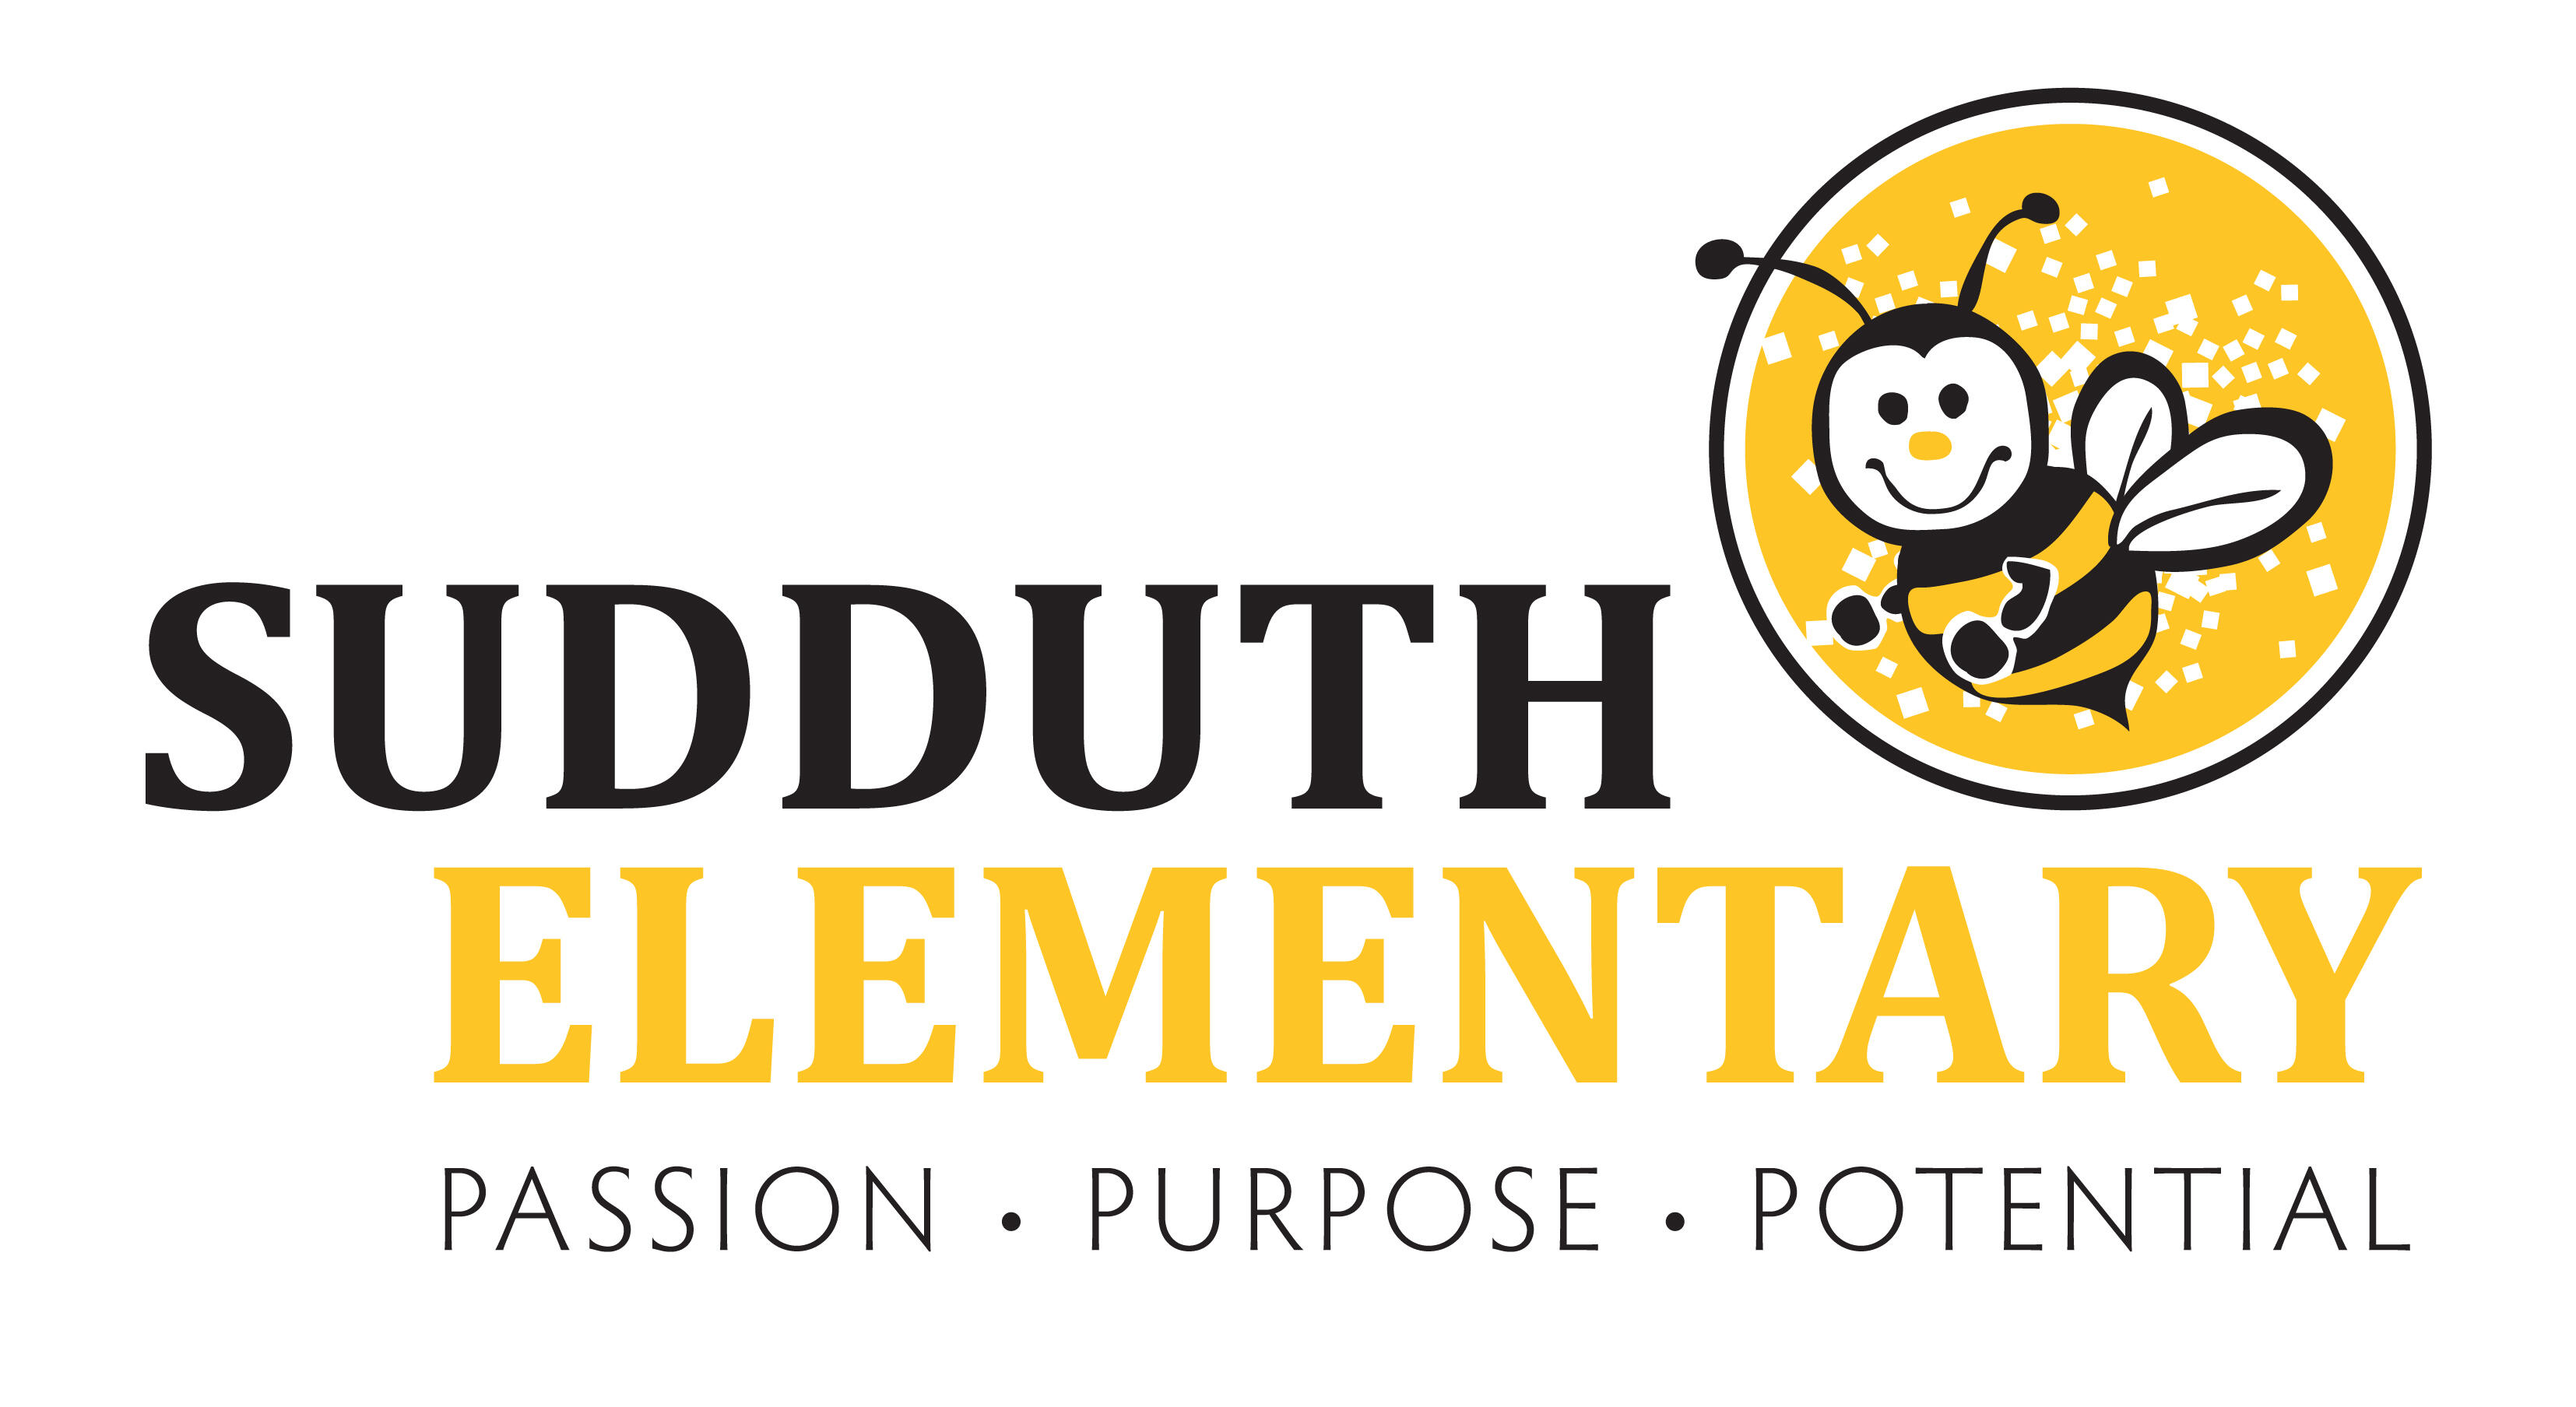 Sudduth Elementary logo